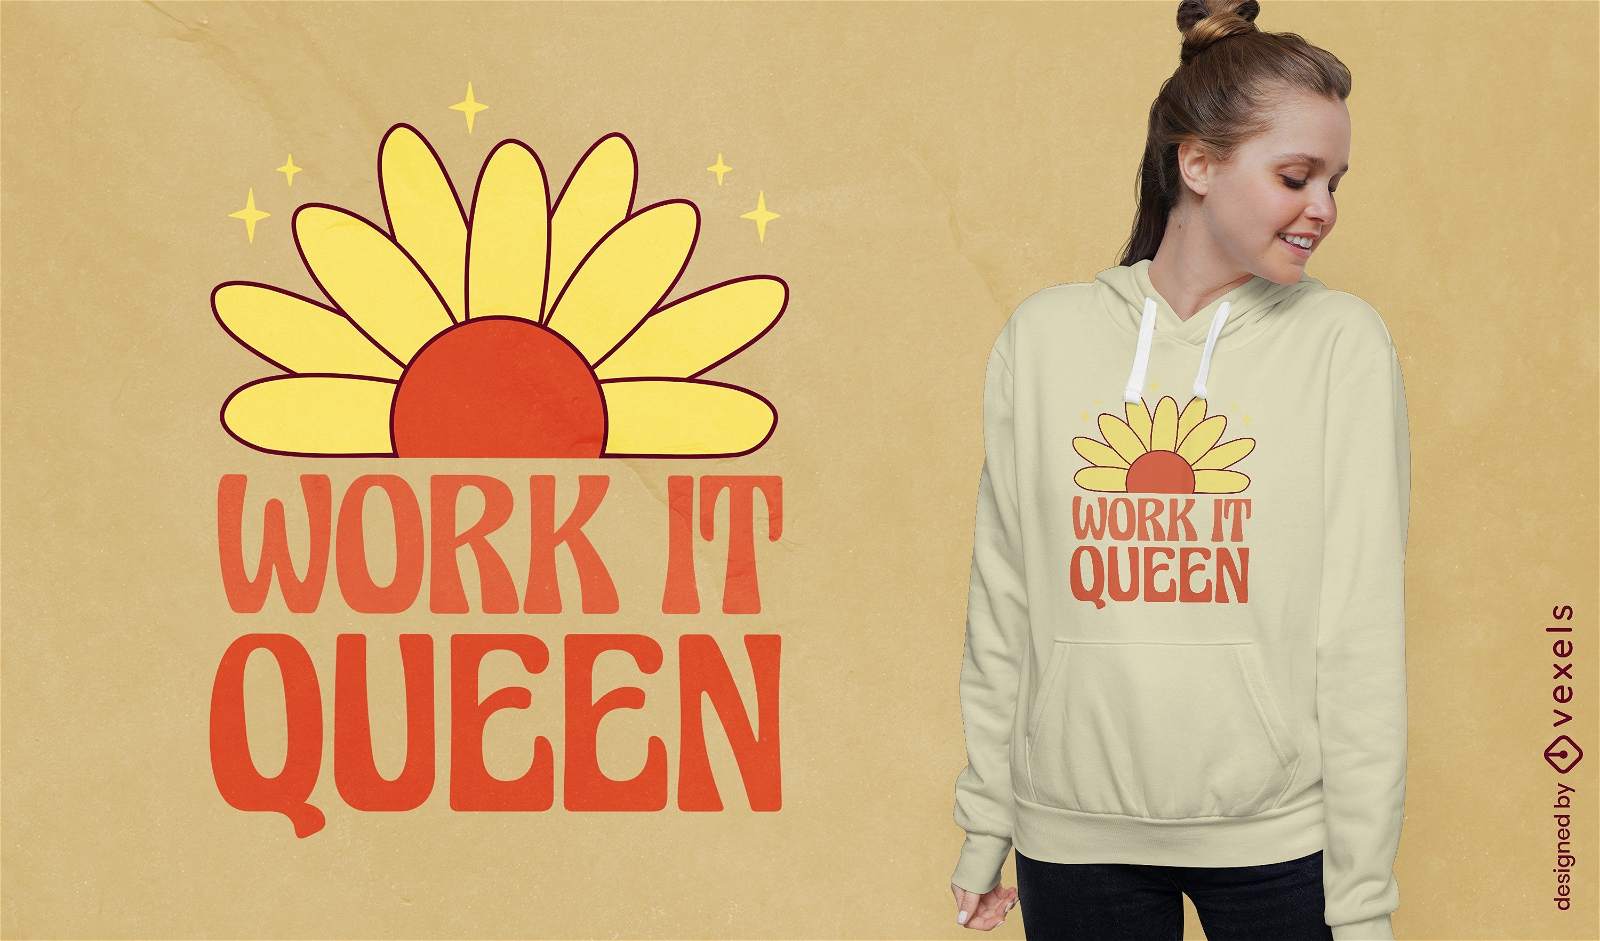 Work it queen diseño de camiseta de cita feminista